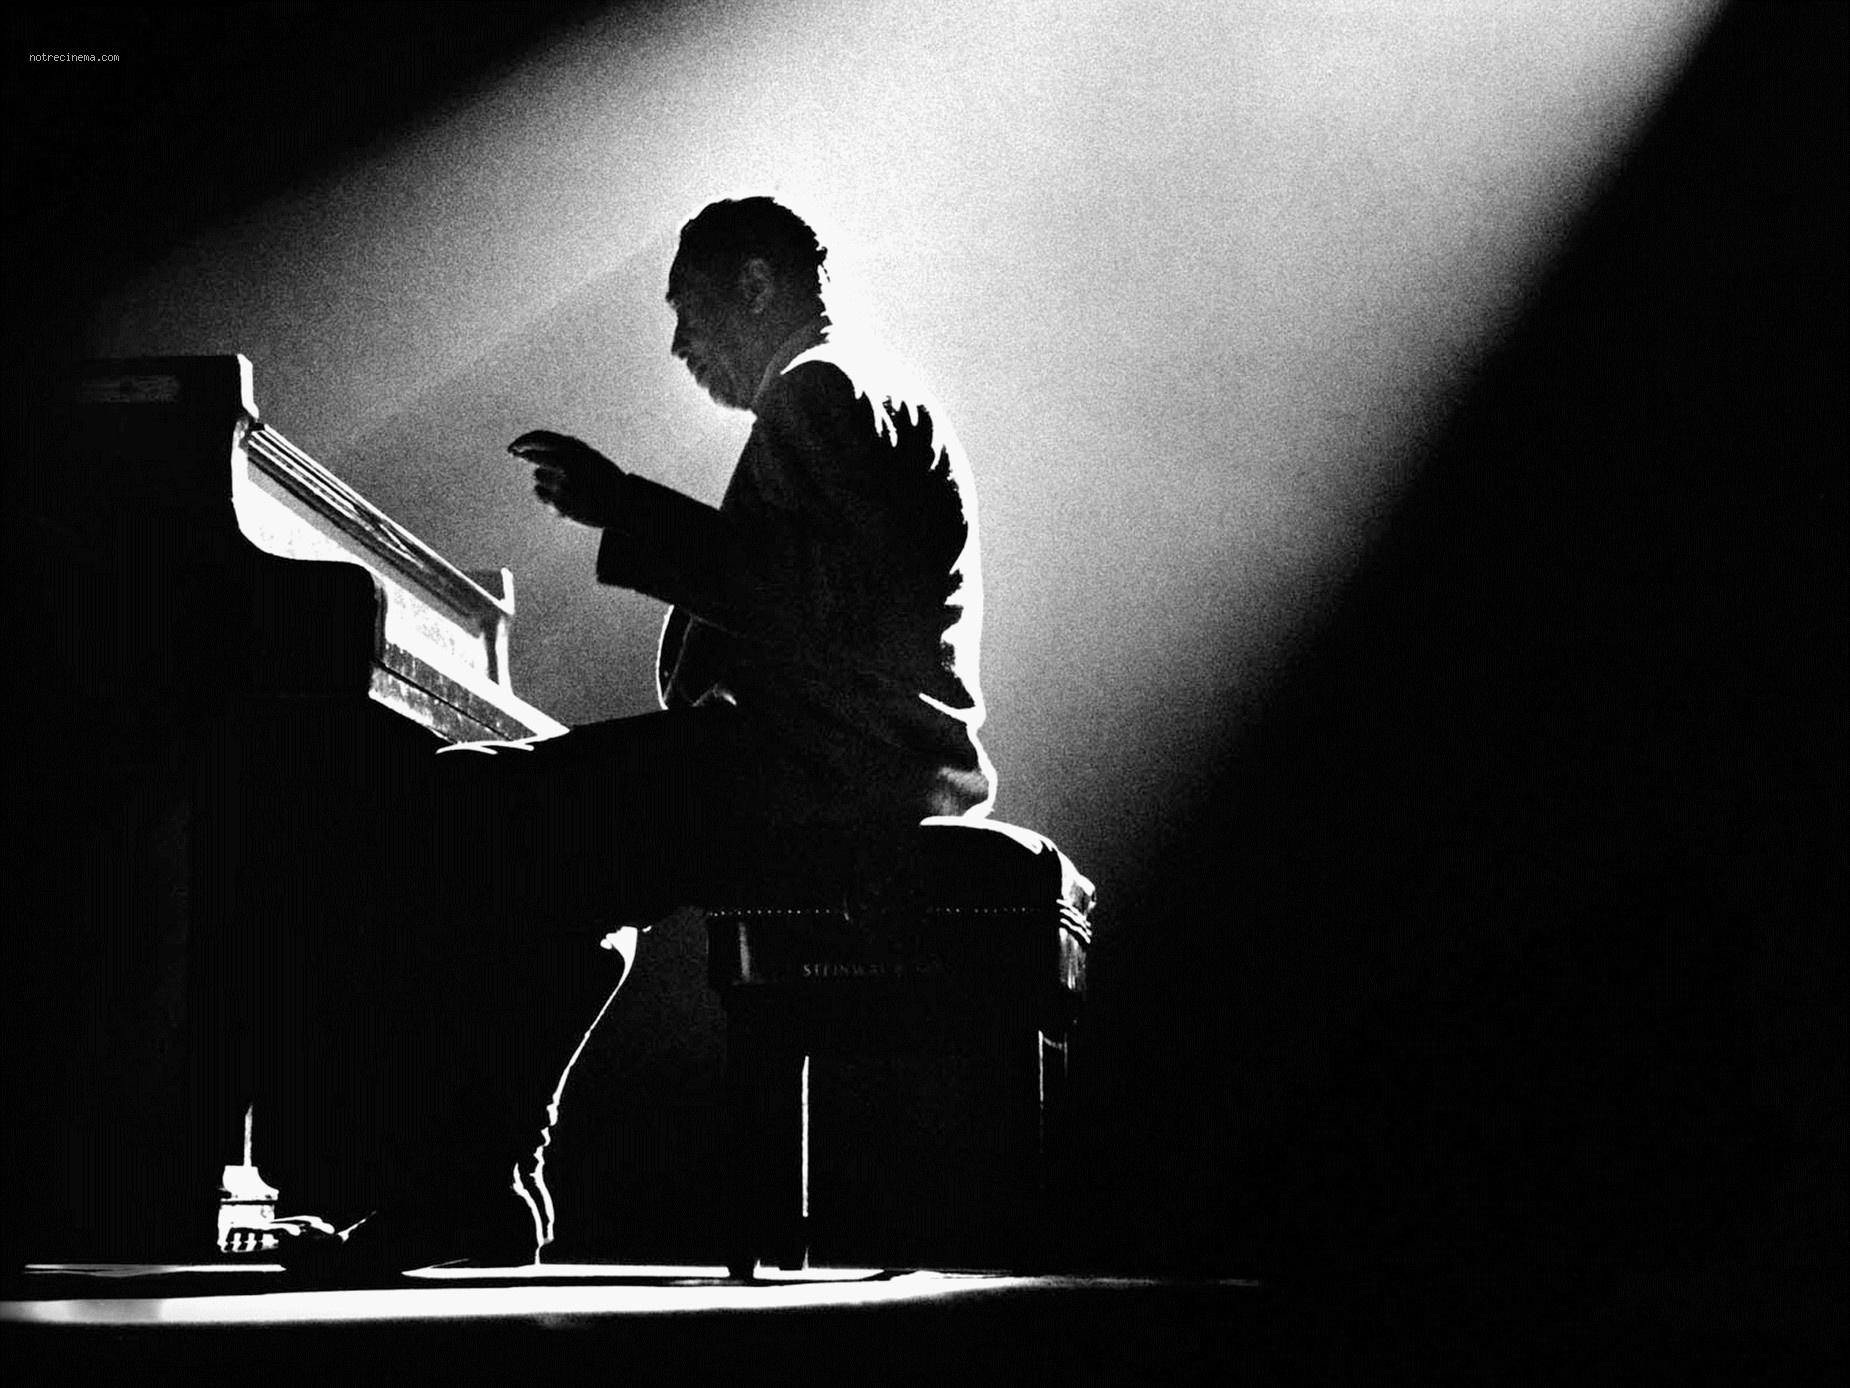 Fotografíade 1958 Del Músico Estadounidense Duke Ellington. Fondo de pantalla